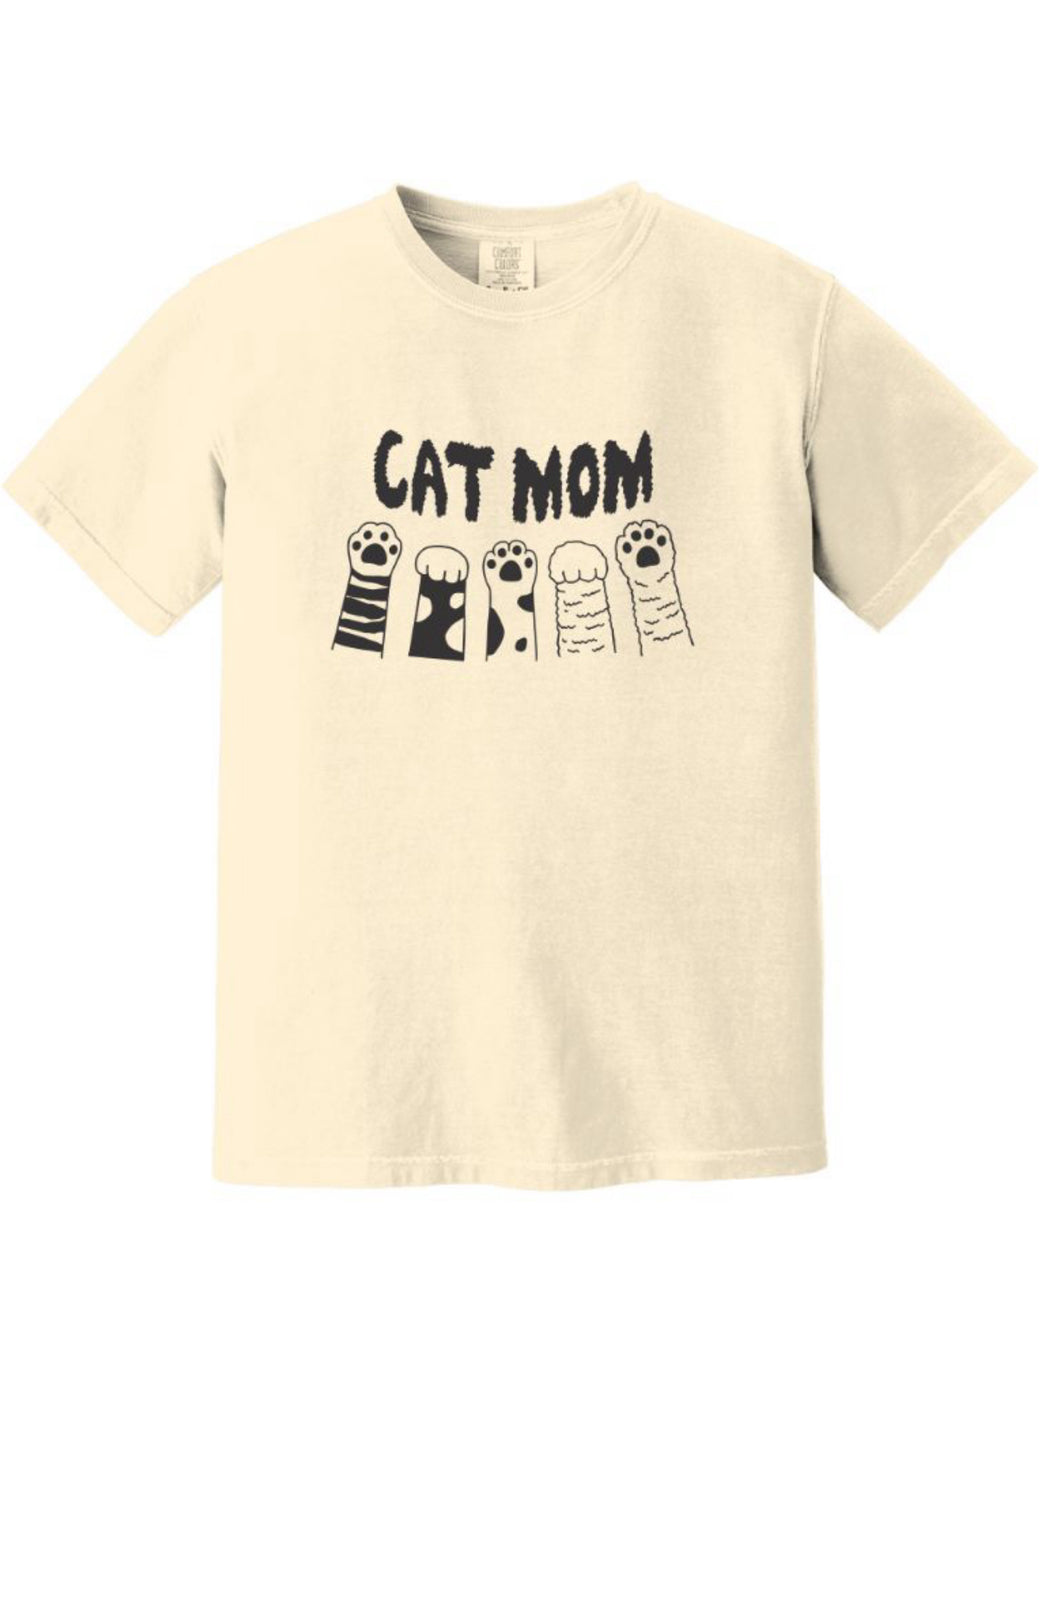 Cat mom tee